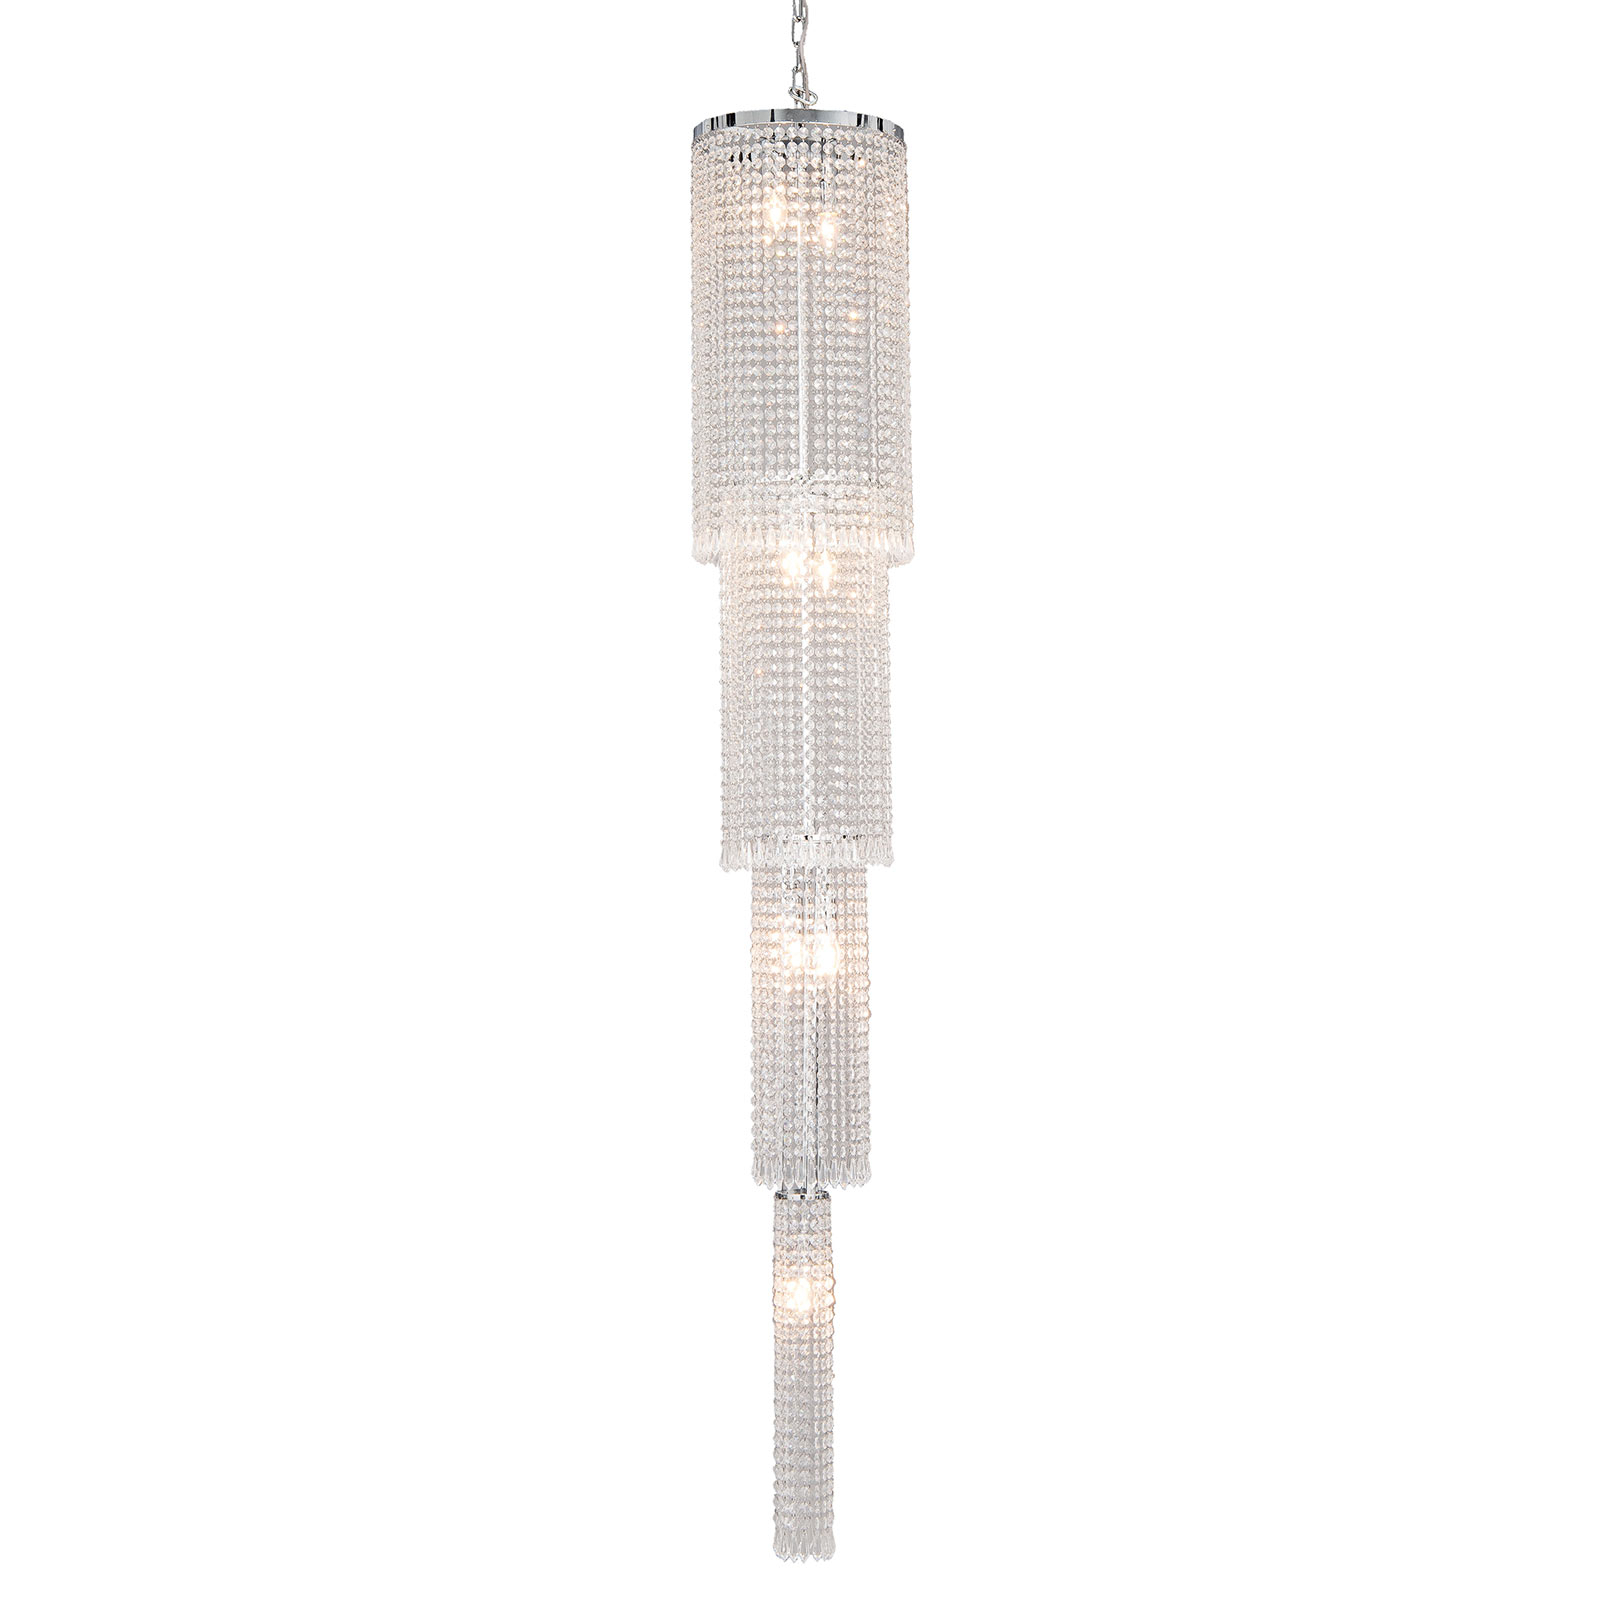 CR114 hanging light, glass elements, 210 cm high